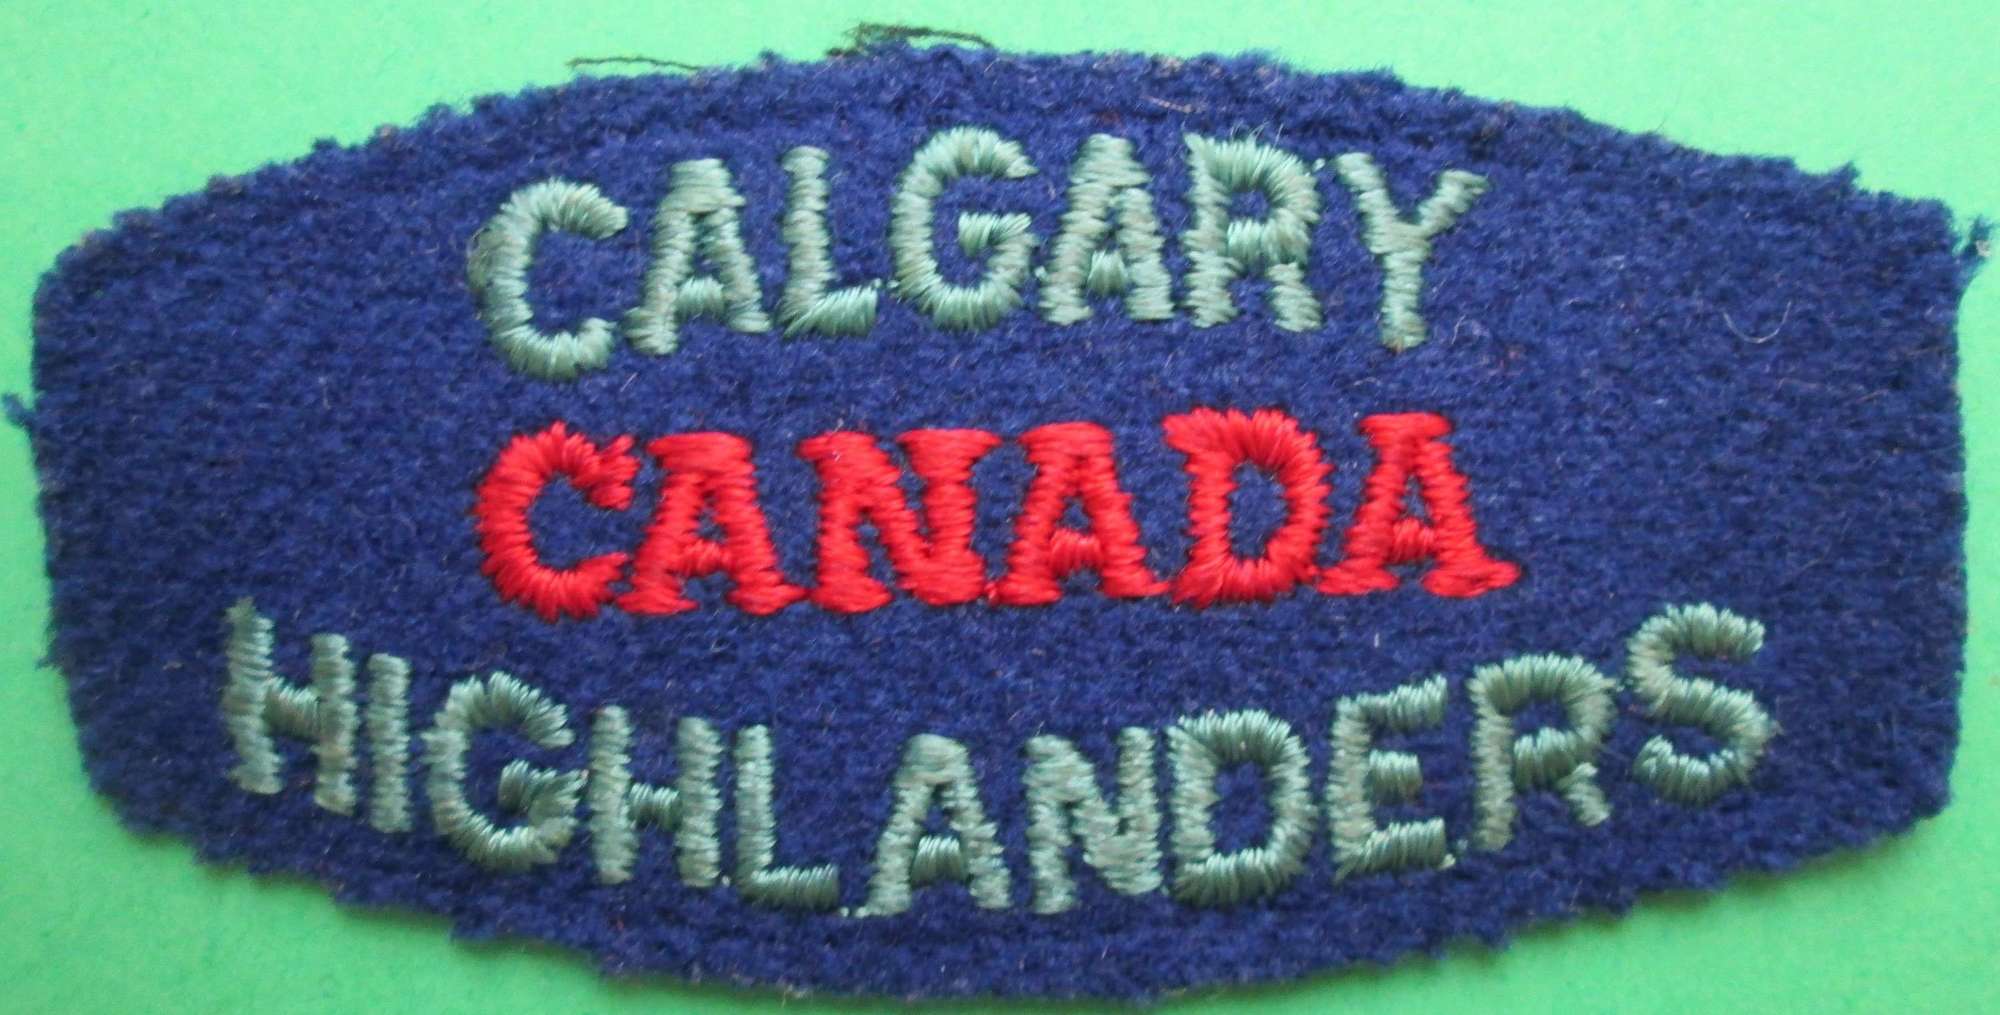 A CALGARY CANADA HIGHLANDERS BADGE